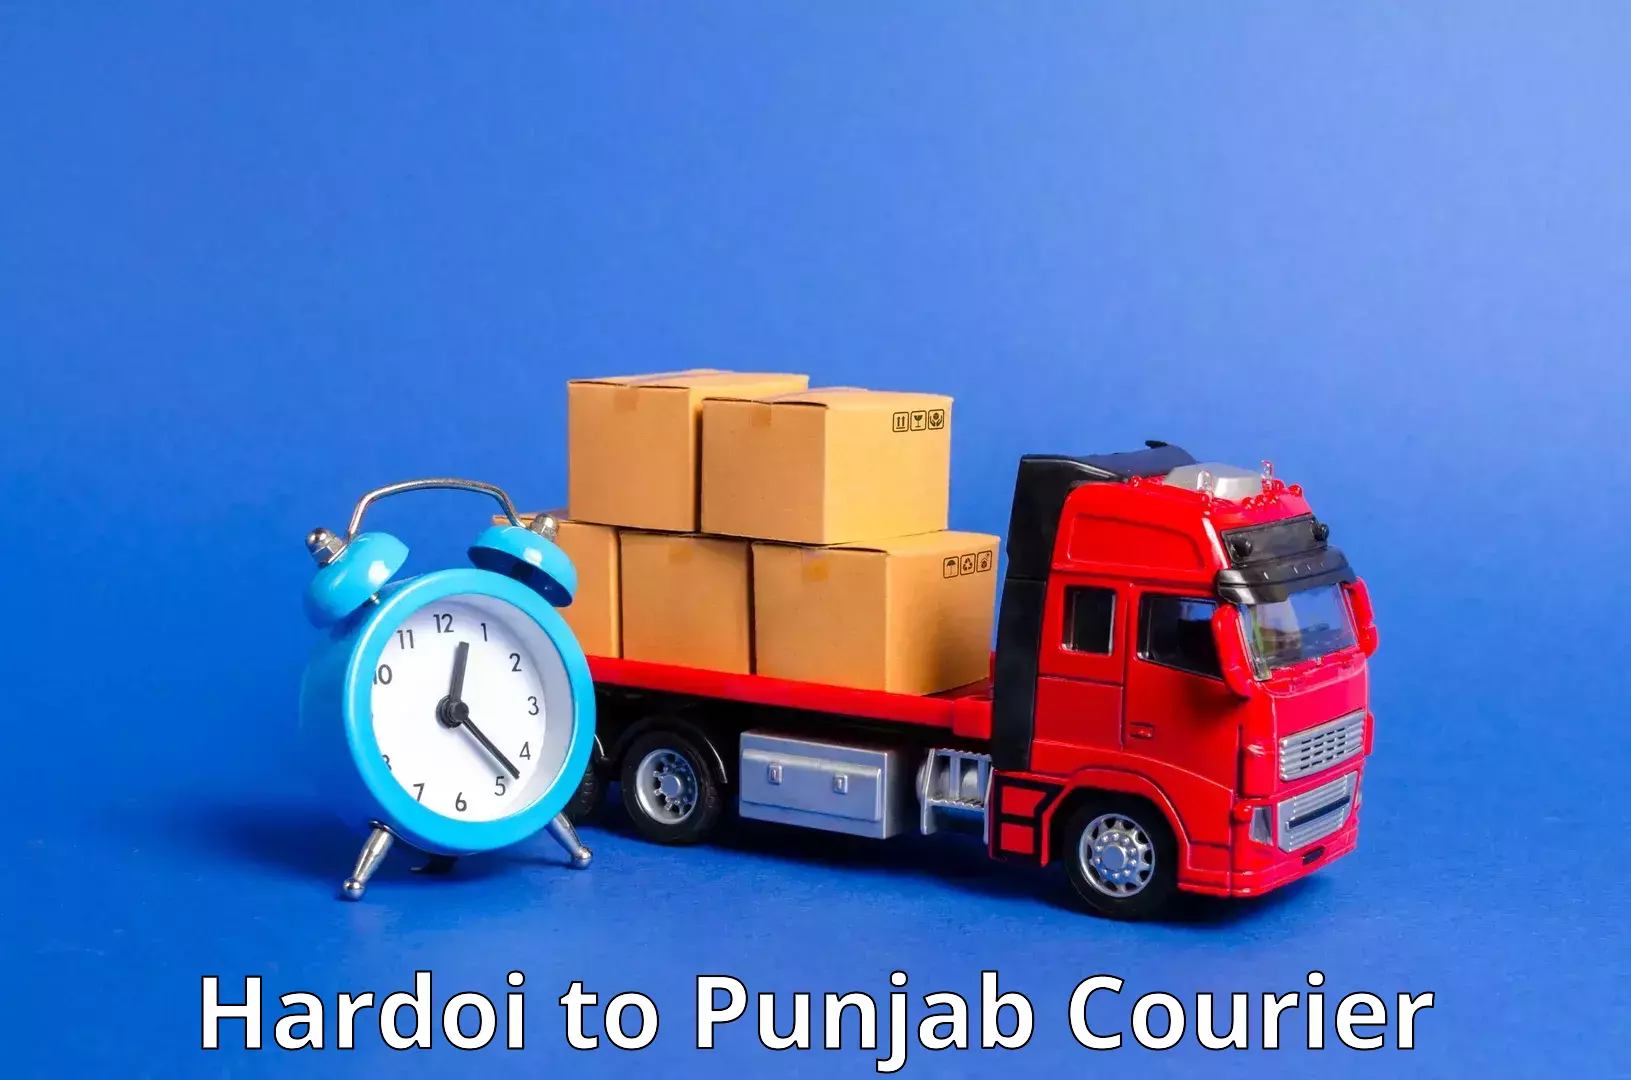 Domestic courier Hardoi to Ludhiana